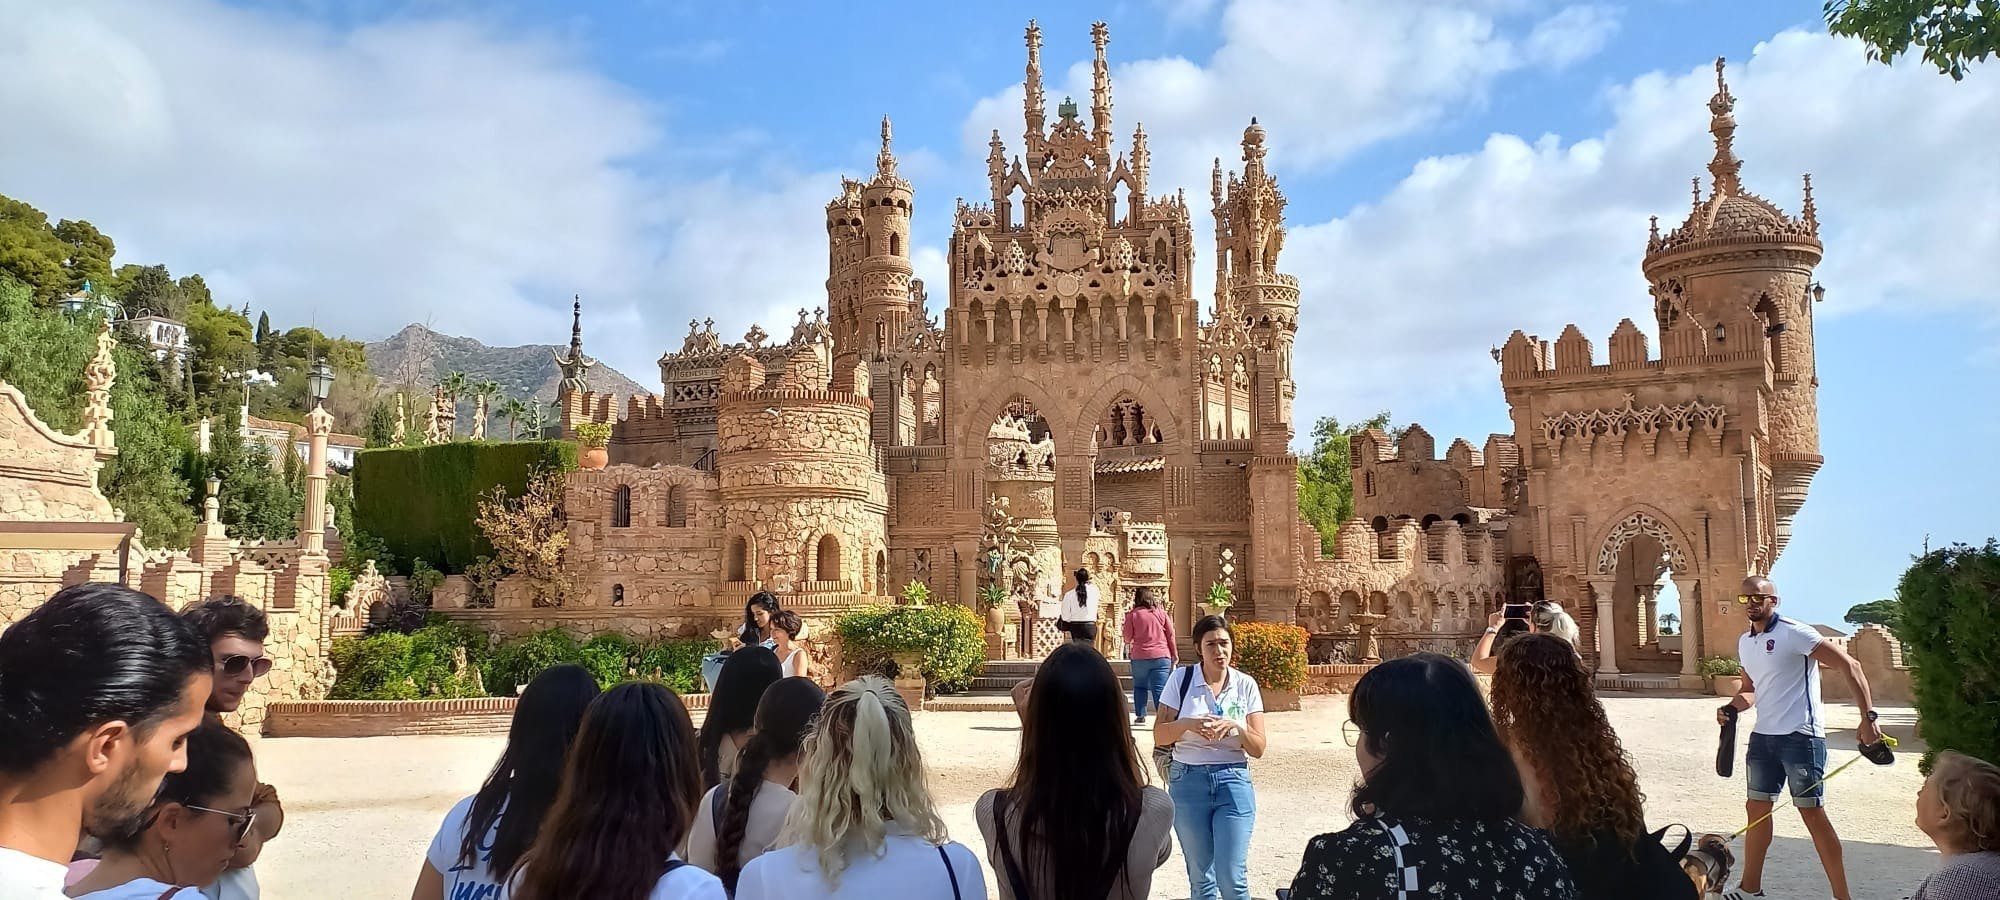 Castillo de Colomares small-group guided tour Musement